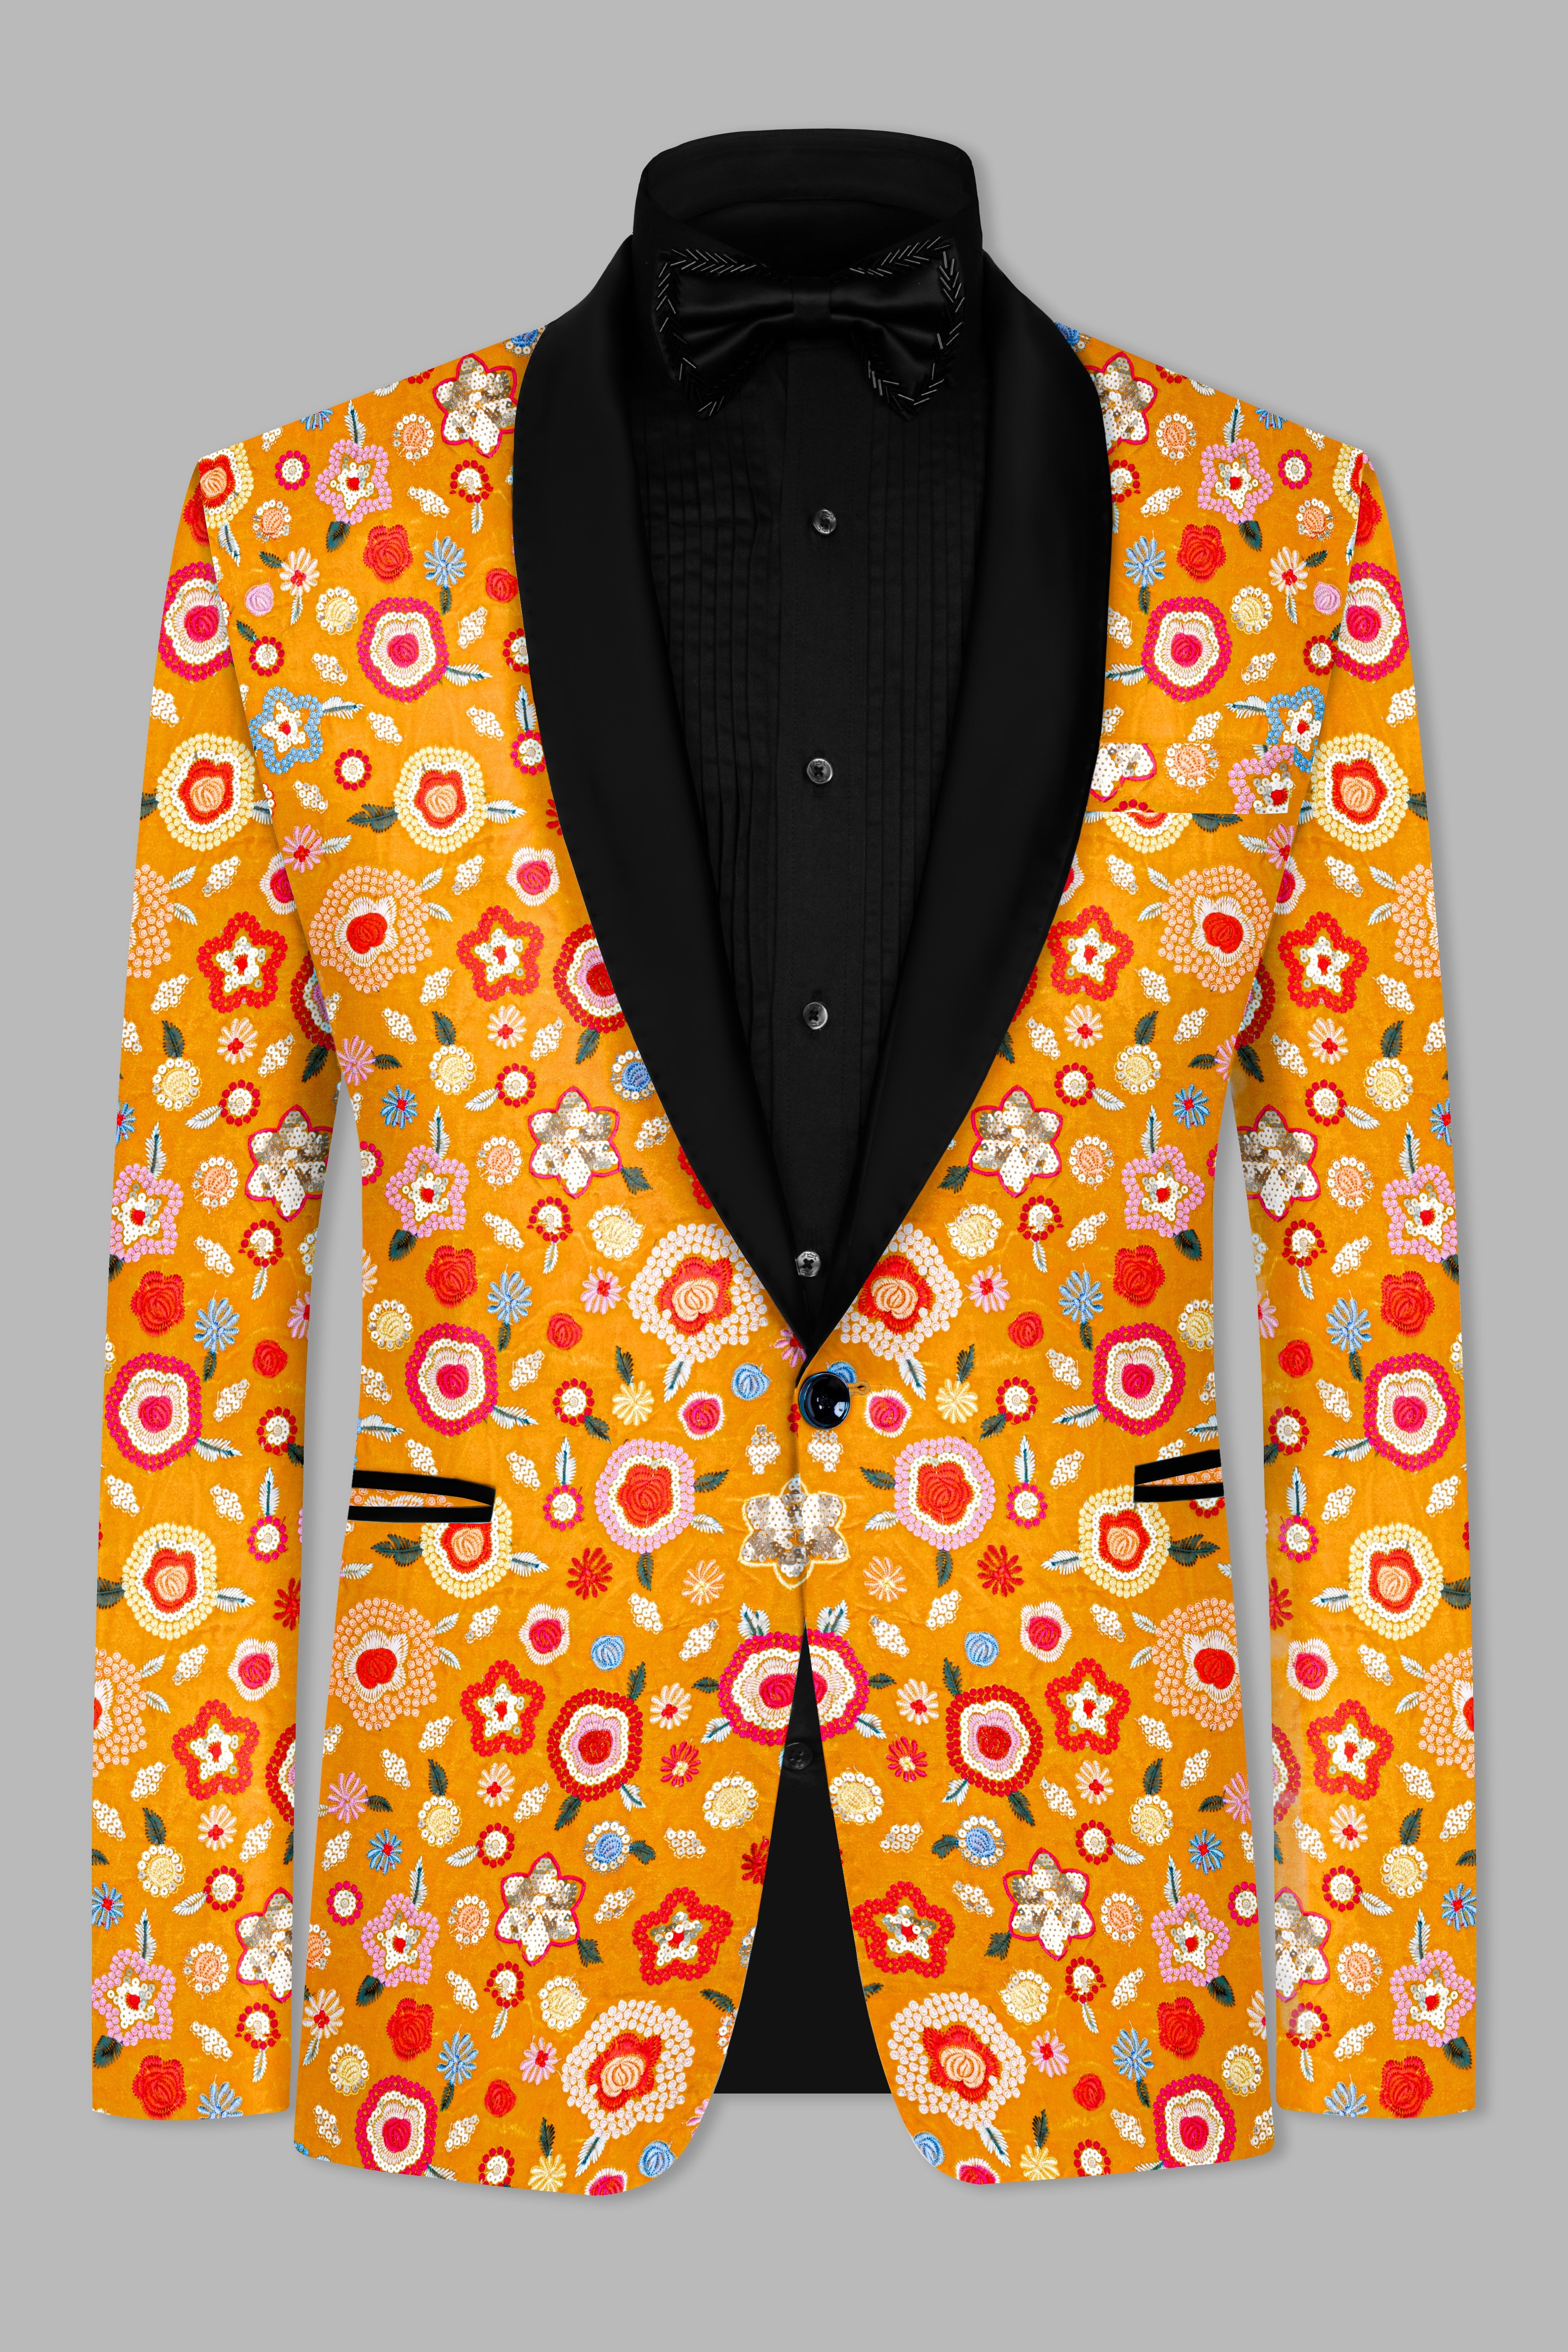 Tangerine Yellow And Alizarin Red Velvet Floral Thread Embroidered Tuxedo Blazer